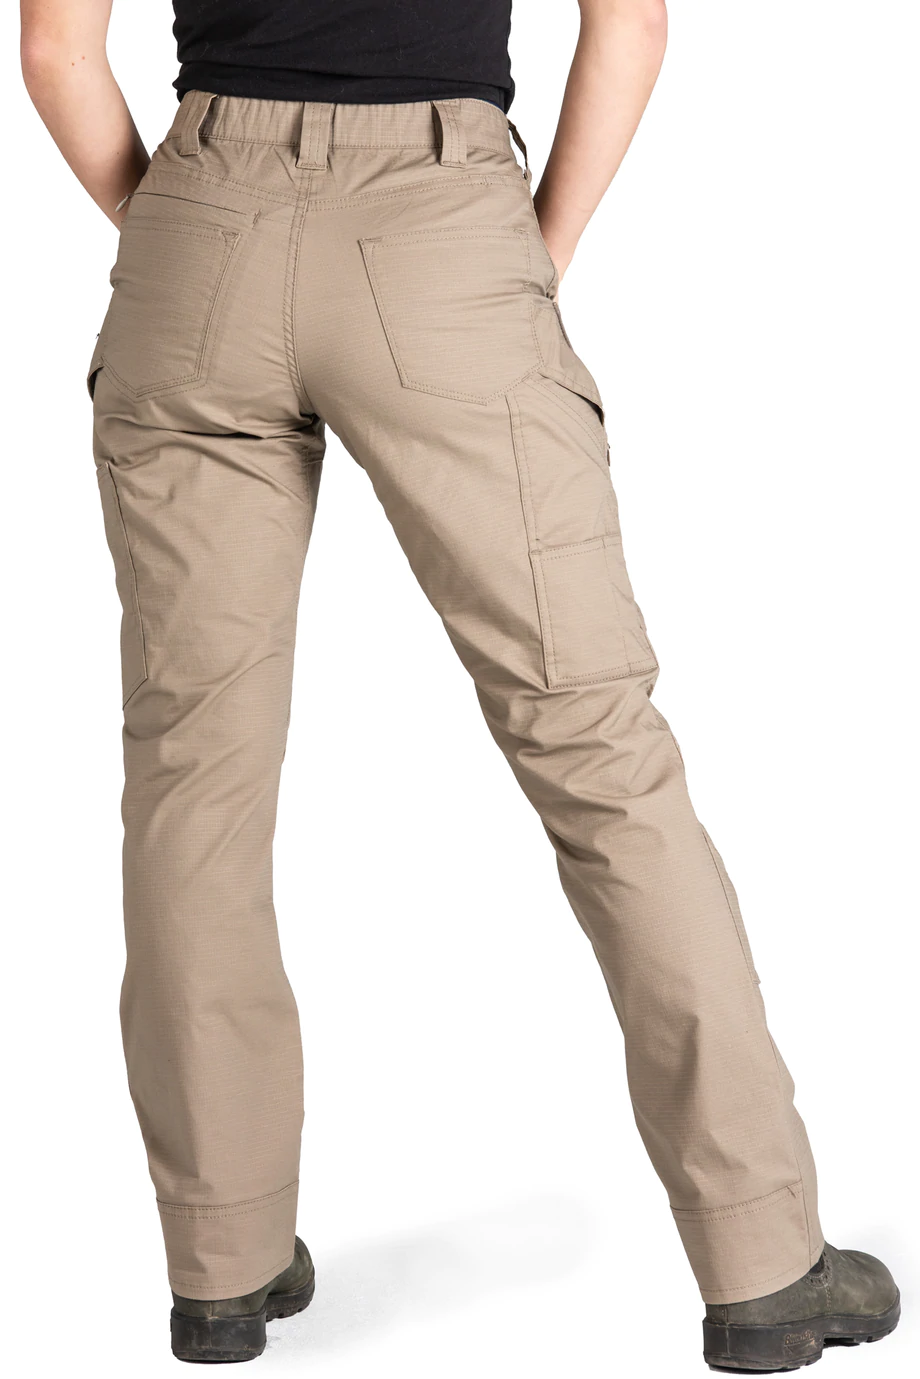 P&F Women's stretch work pants – PF805 - Brasco Safety